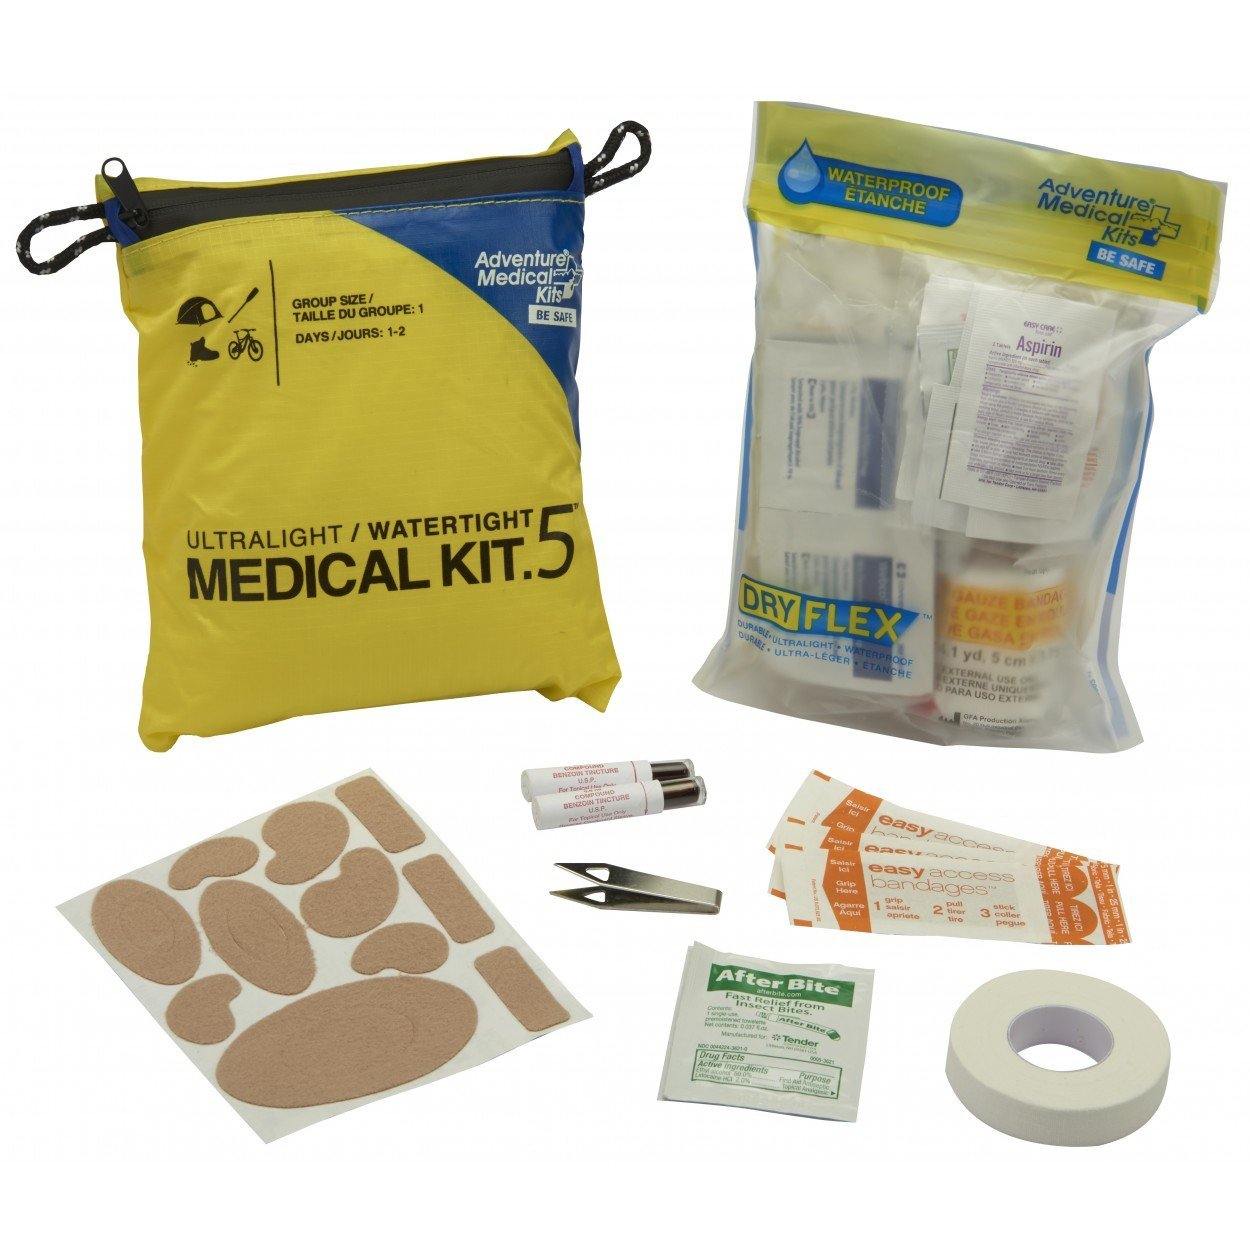 Adventure Medical Kit Ultralight .5 First Aid Kit